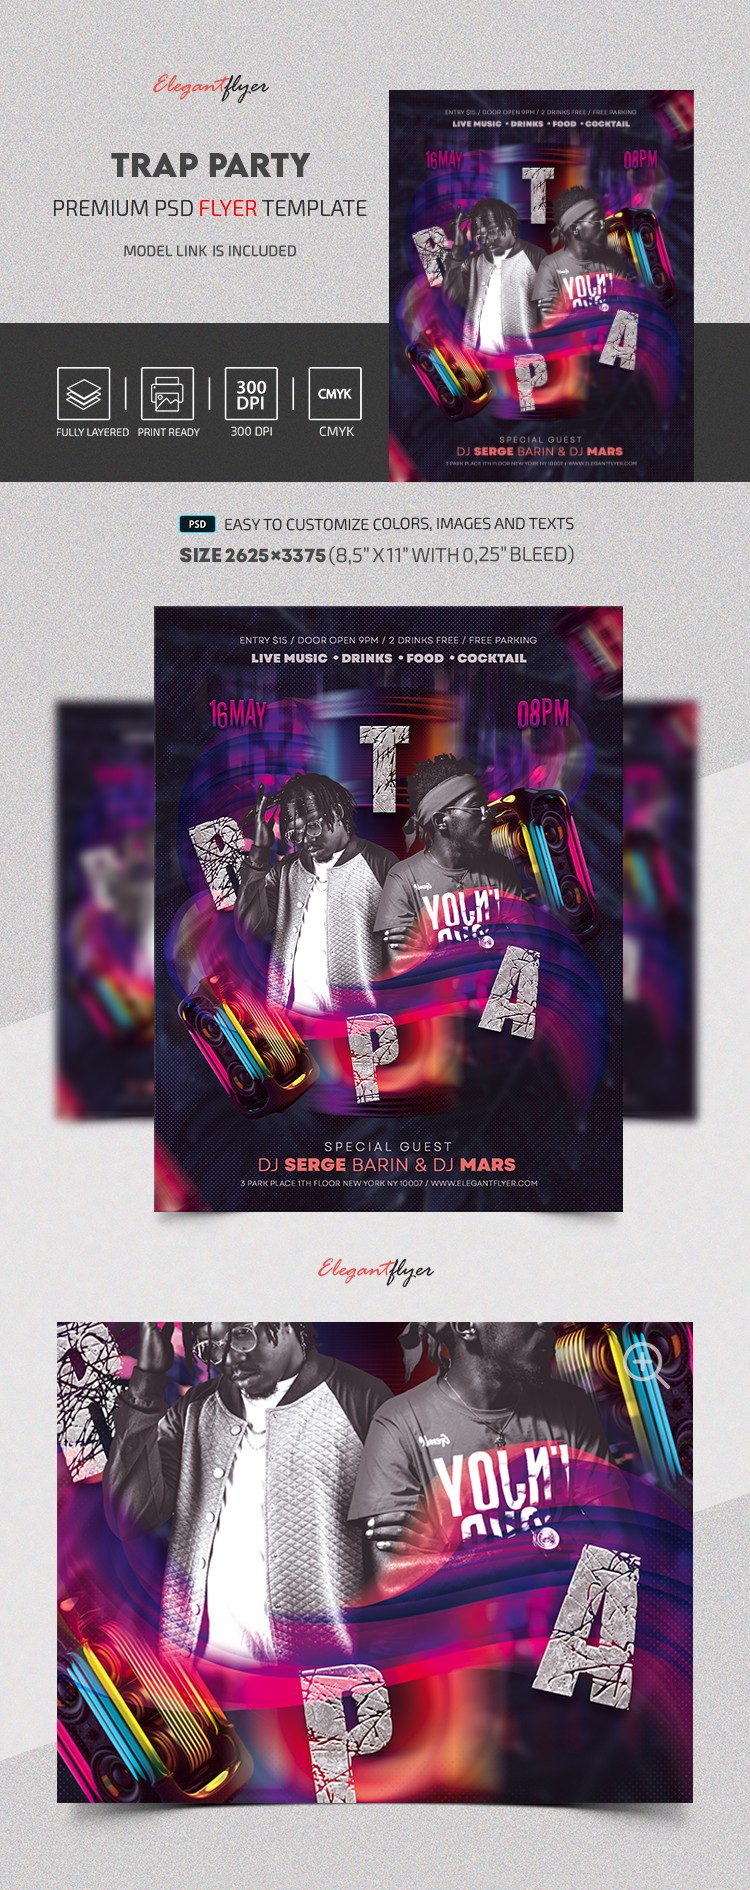 Trap Party - Premium PSD Flyer Template by ElegantFlyer